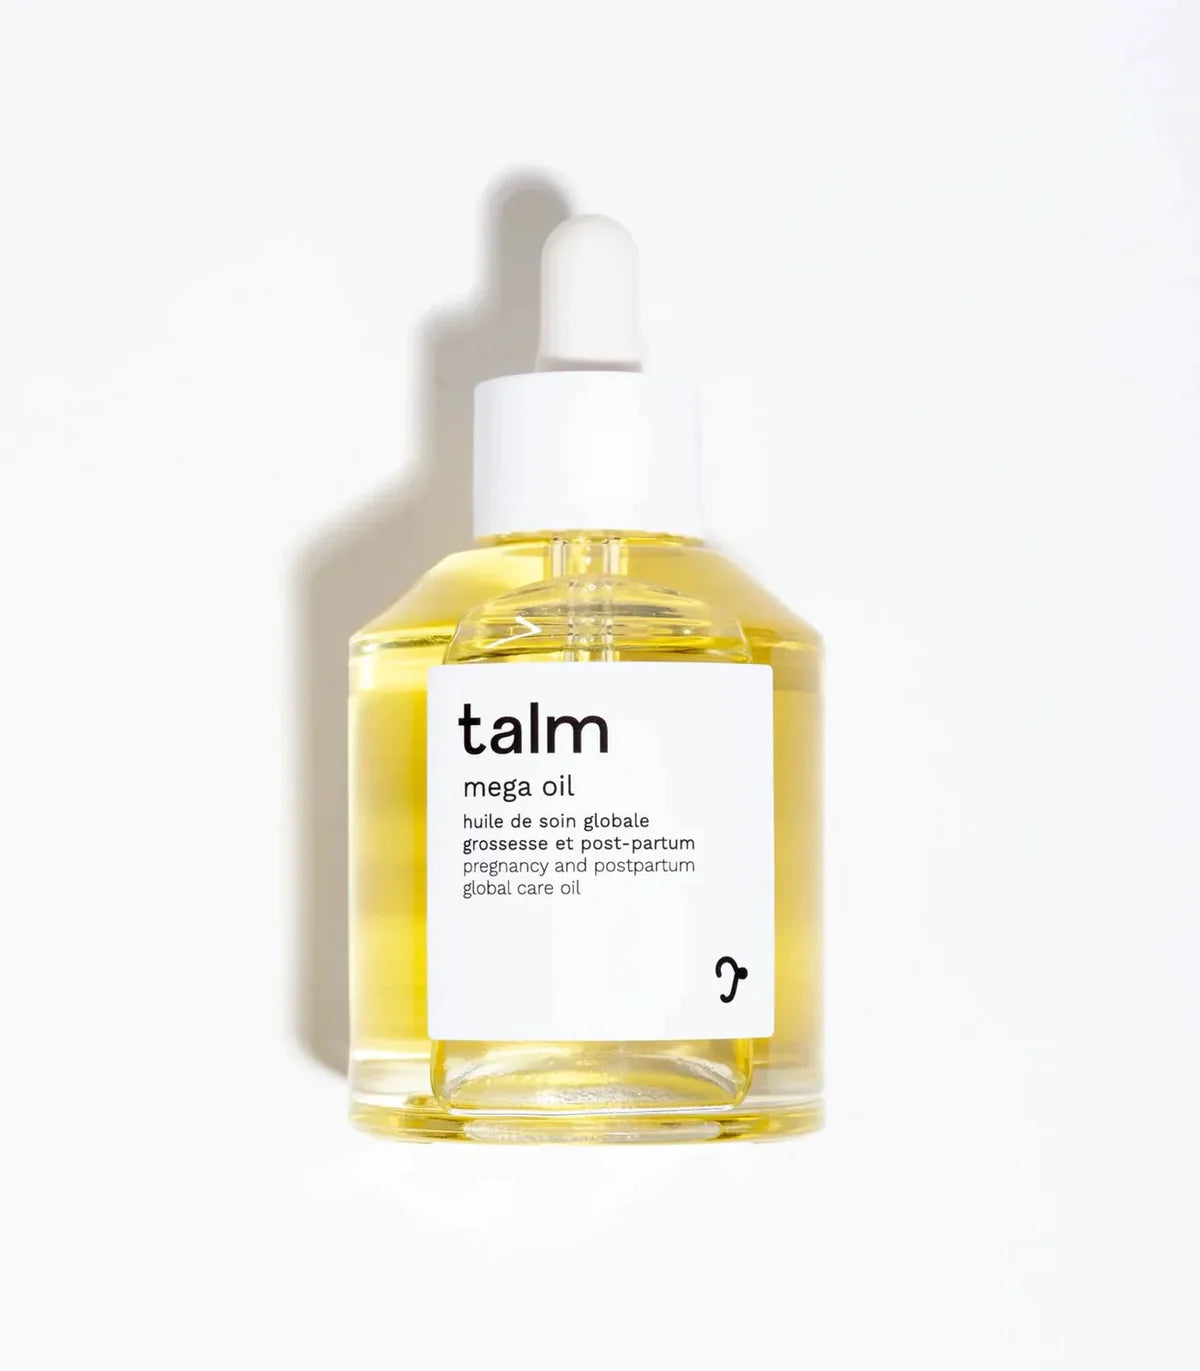 Talm- Mega oil - Huile de soin bio grossesse et post-partum - 30ml